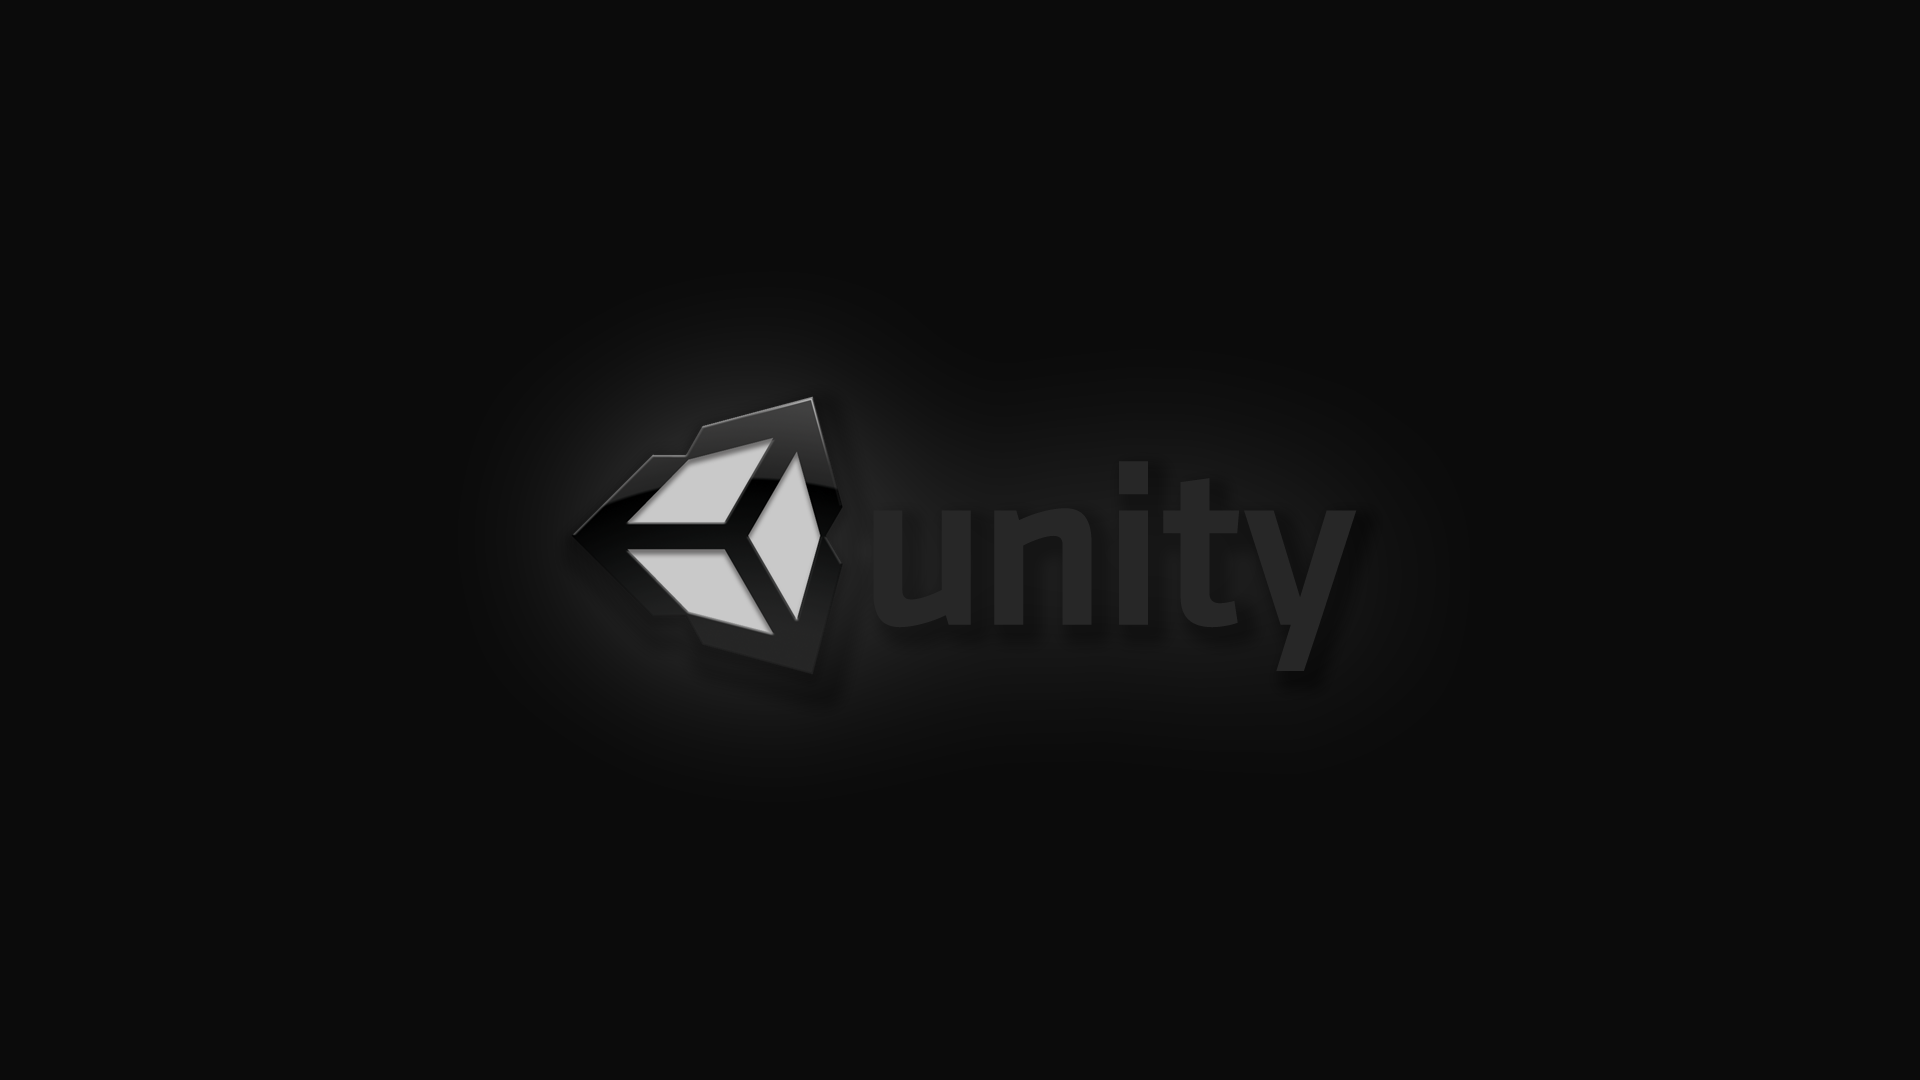 Unity 3d Wallpaper On